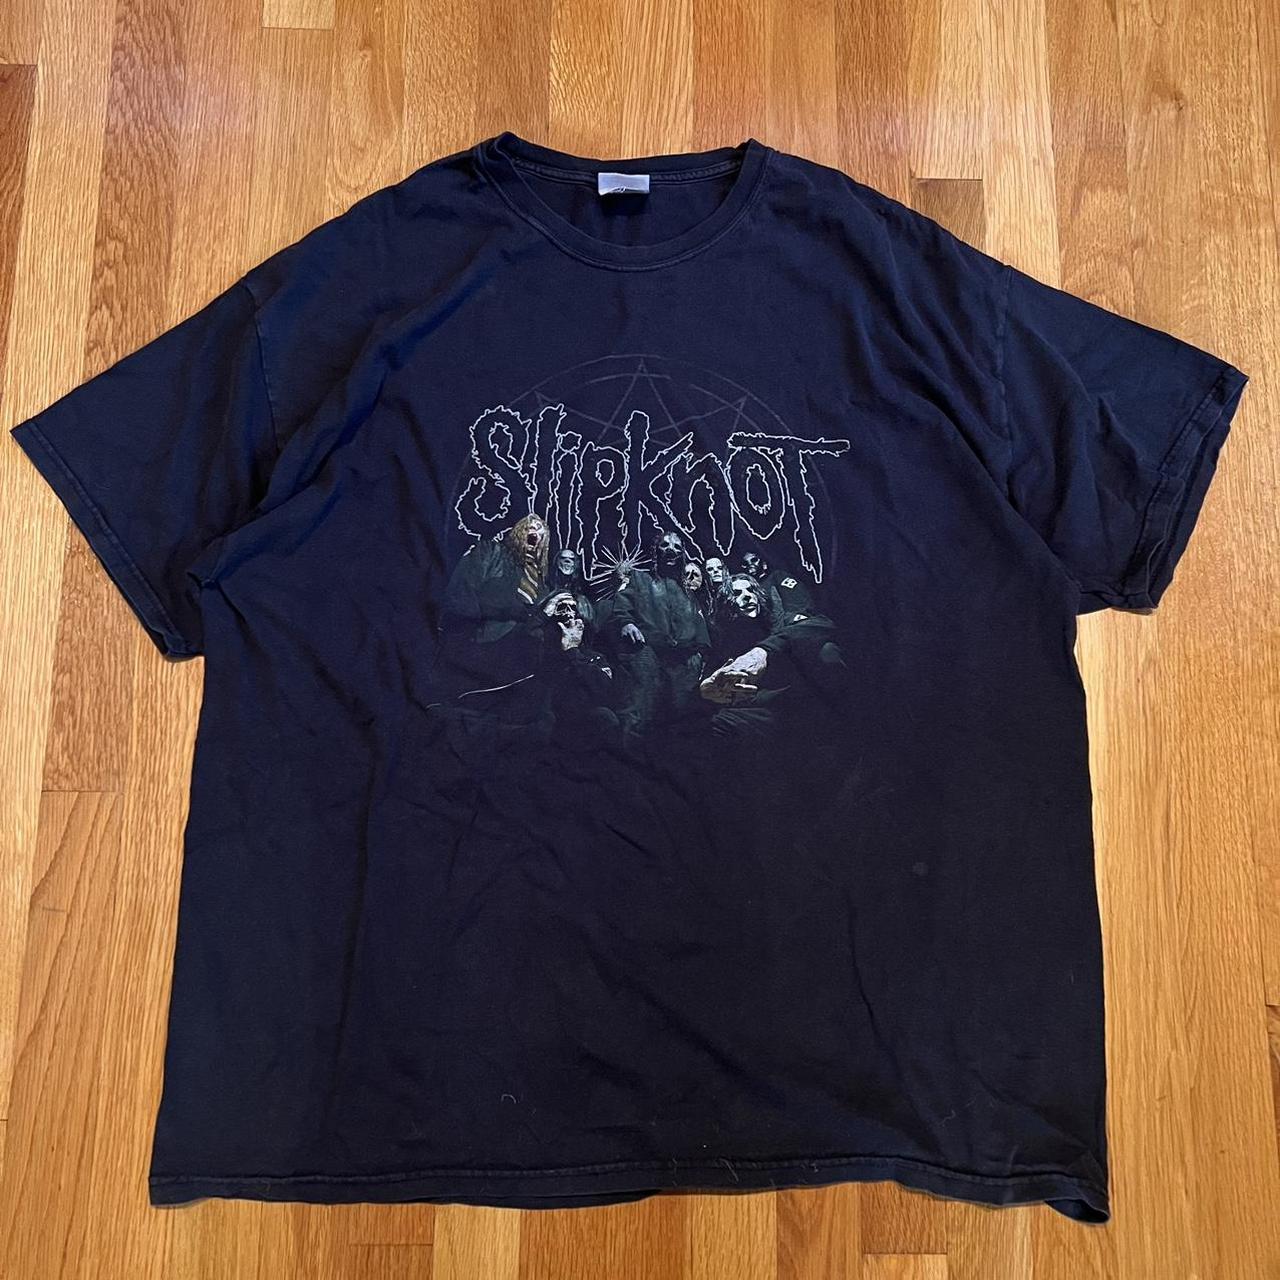 Vintage Early 2000’s Slipknot Band Tshirt Size XXL,... - Depop